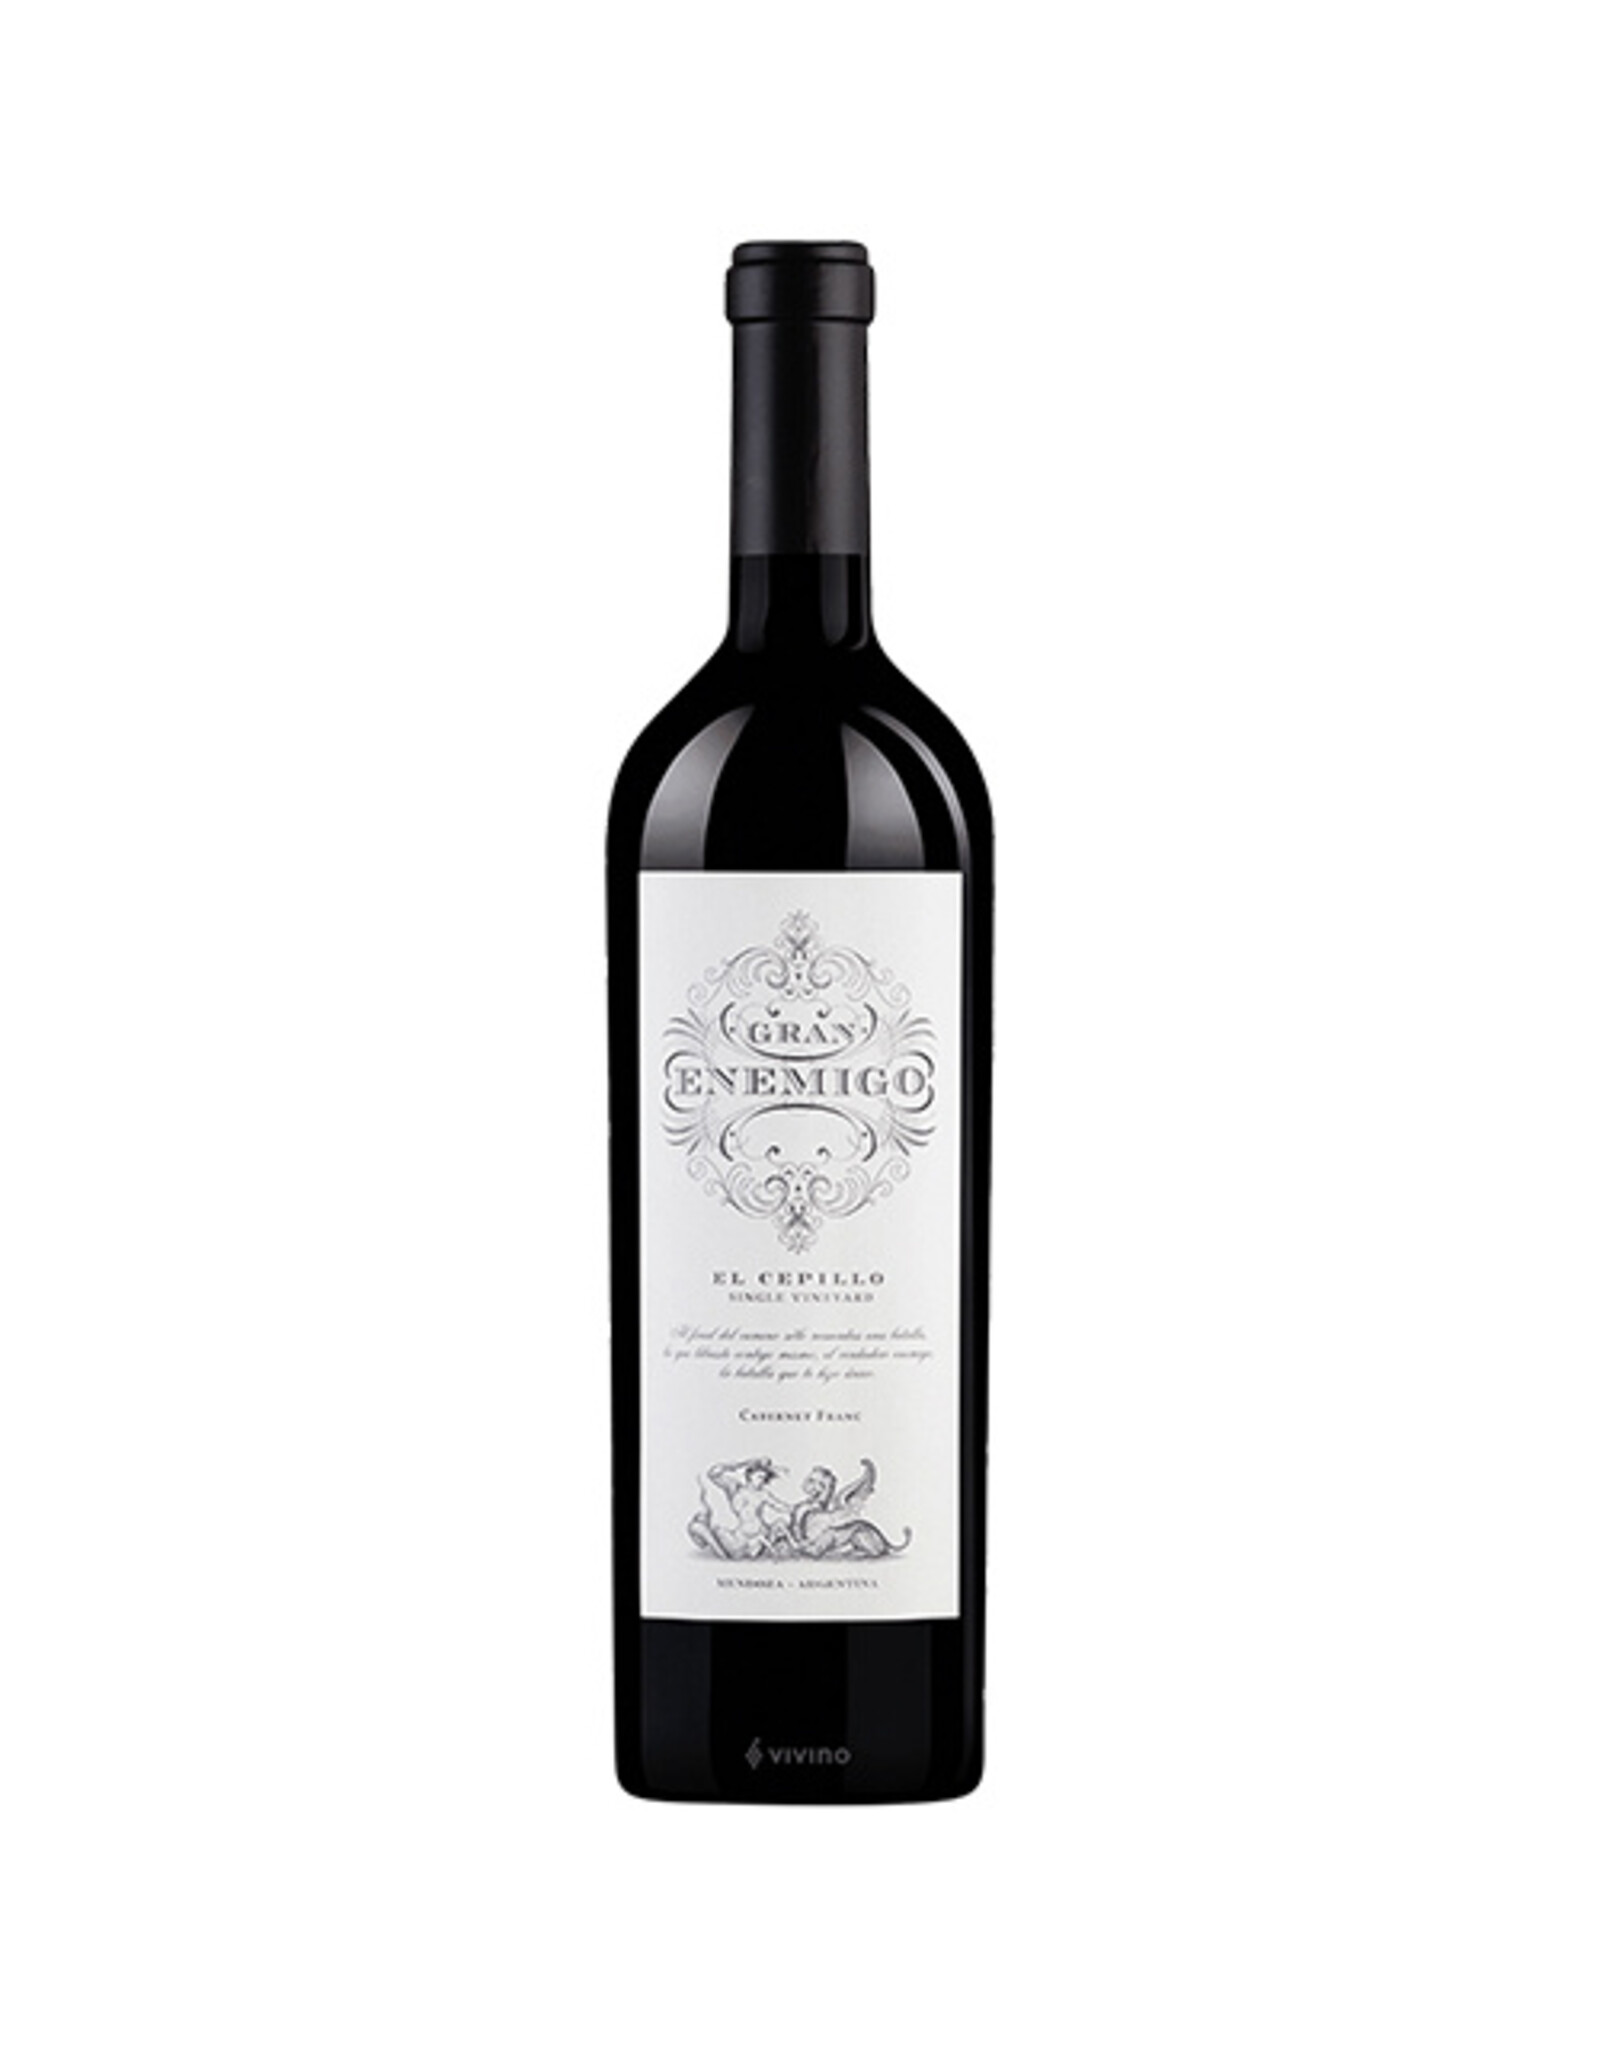 Gran Enemigo Gualtallary Single Vineyard Cabernet Franc 2019